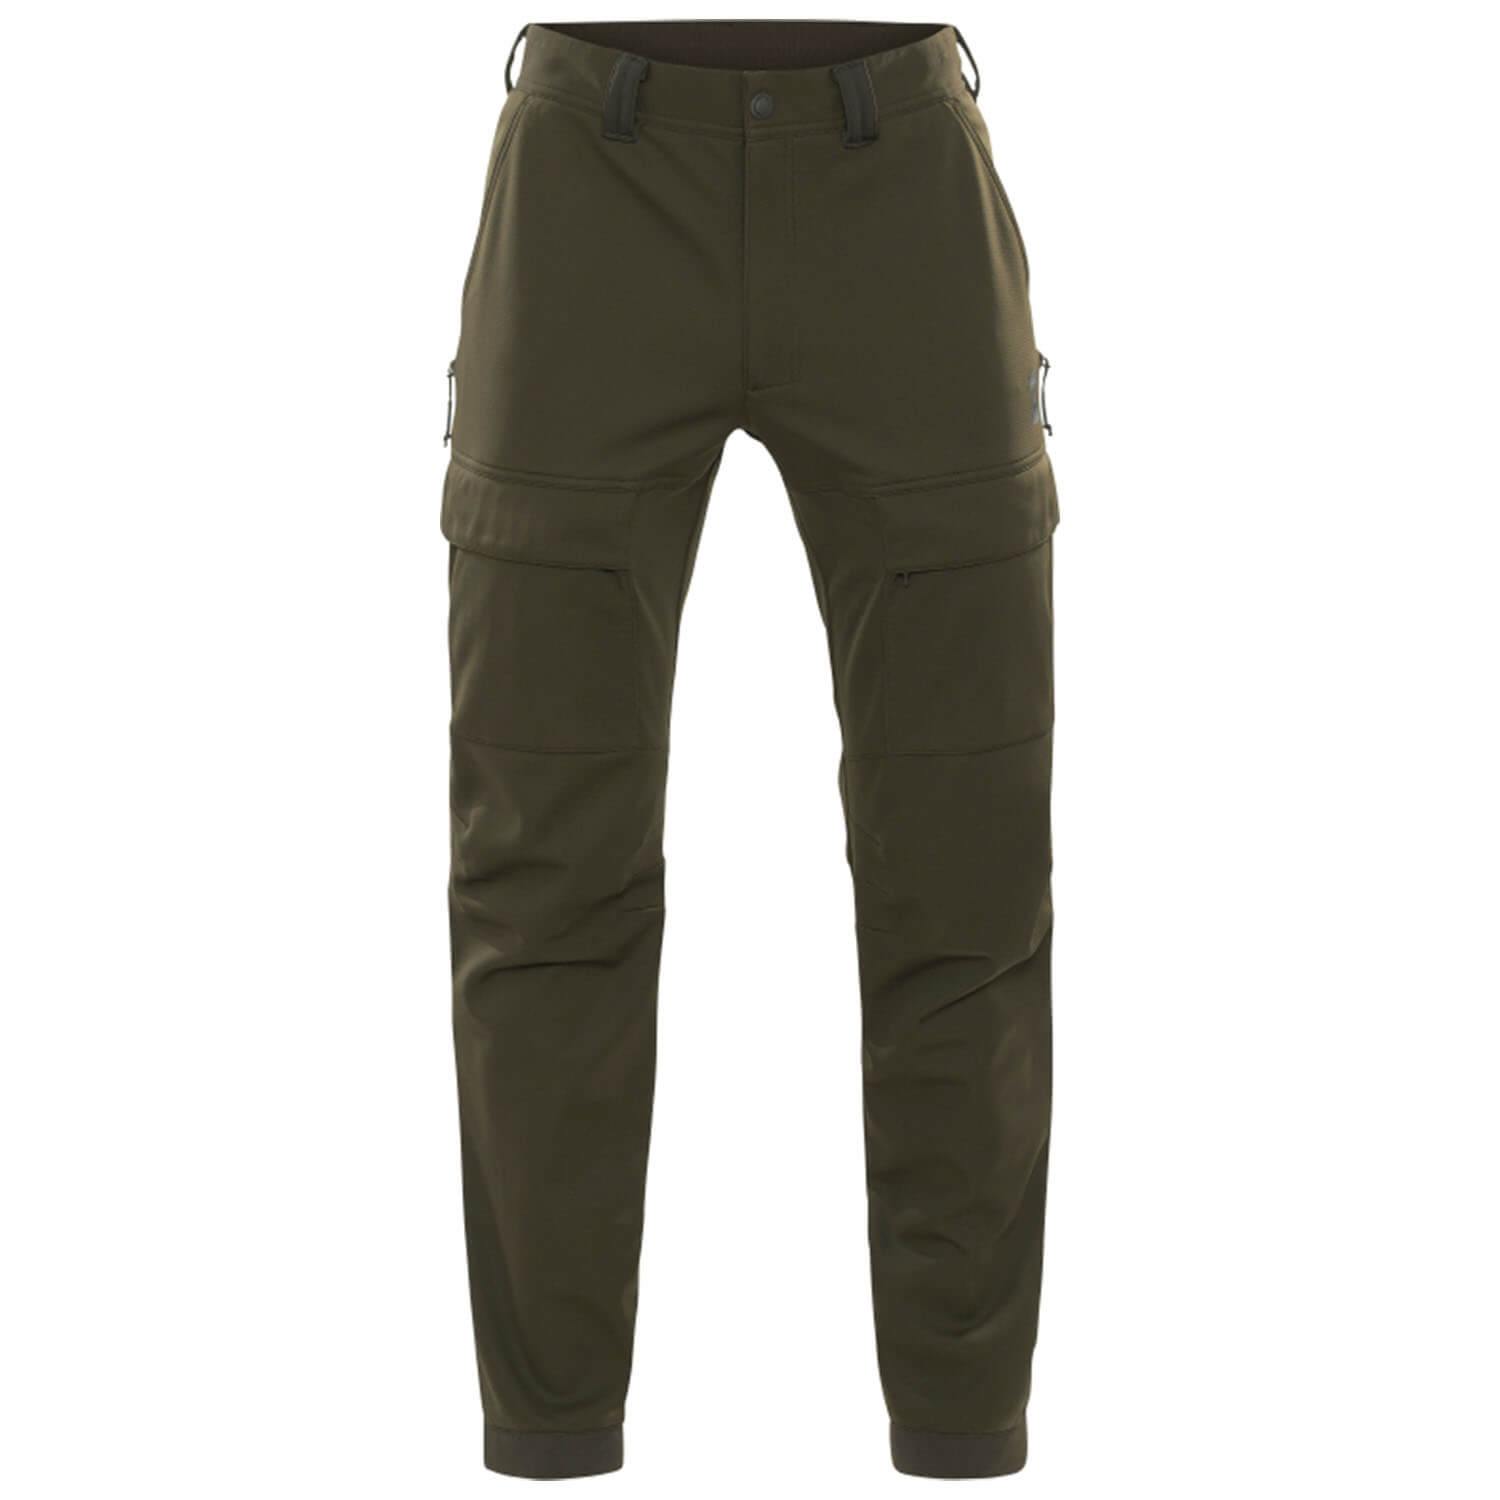 Härkila pants Deer Stalker Light (willow green/shadow brown) - Hunting Clothing